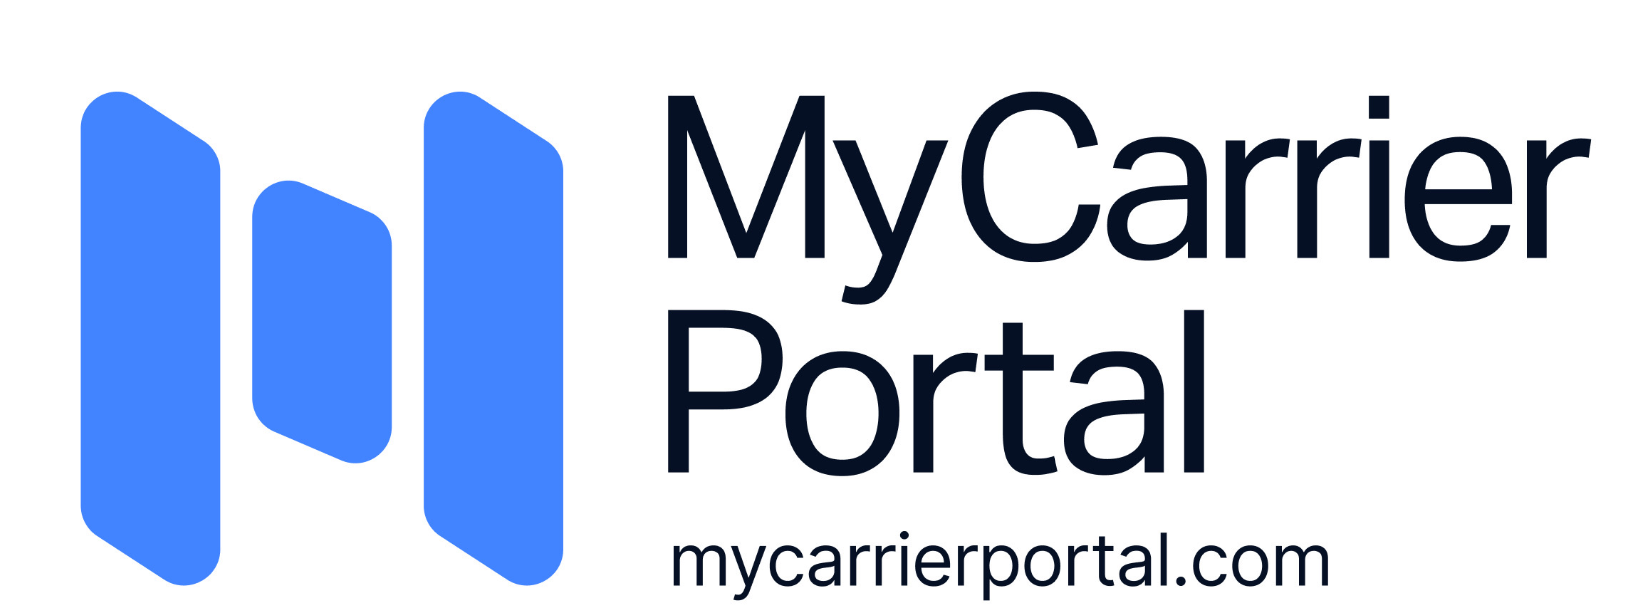 MyCarrier Portal